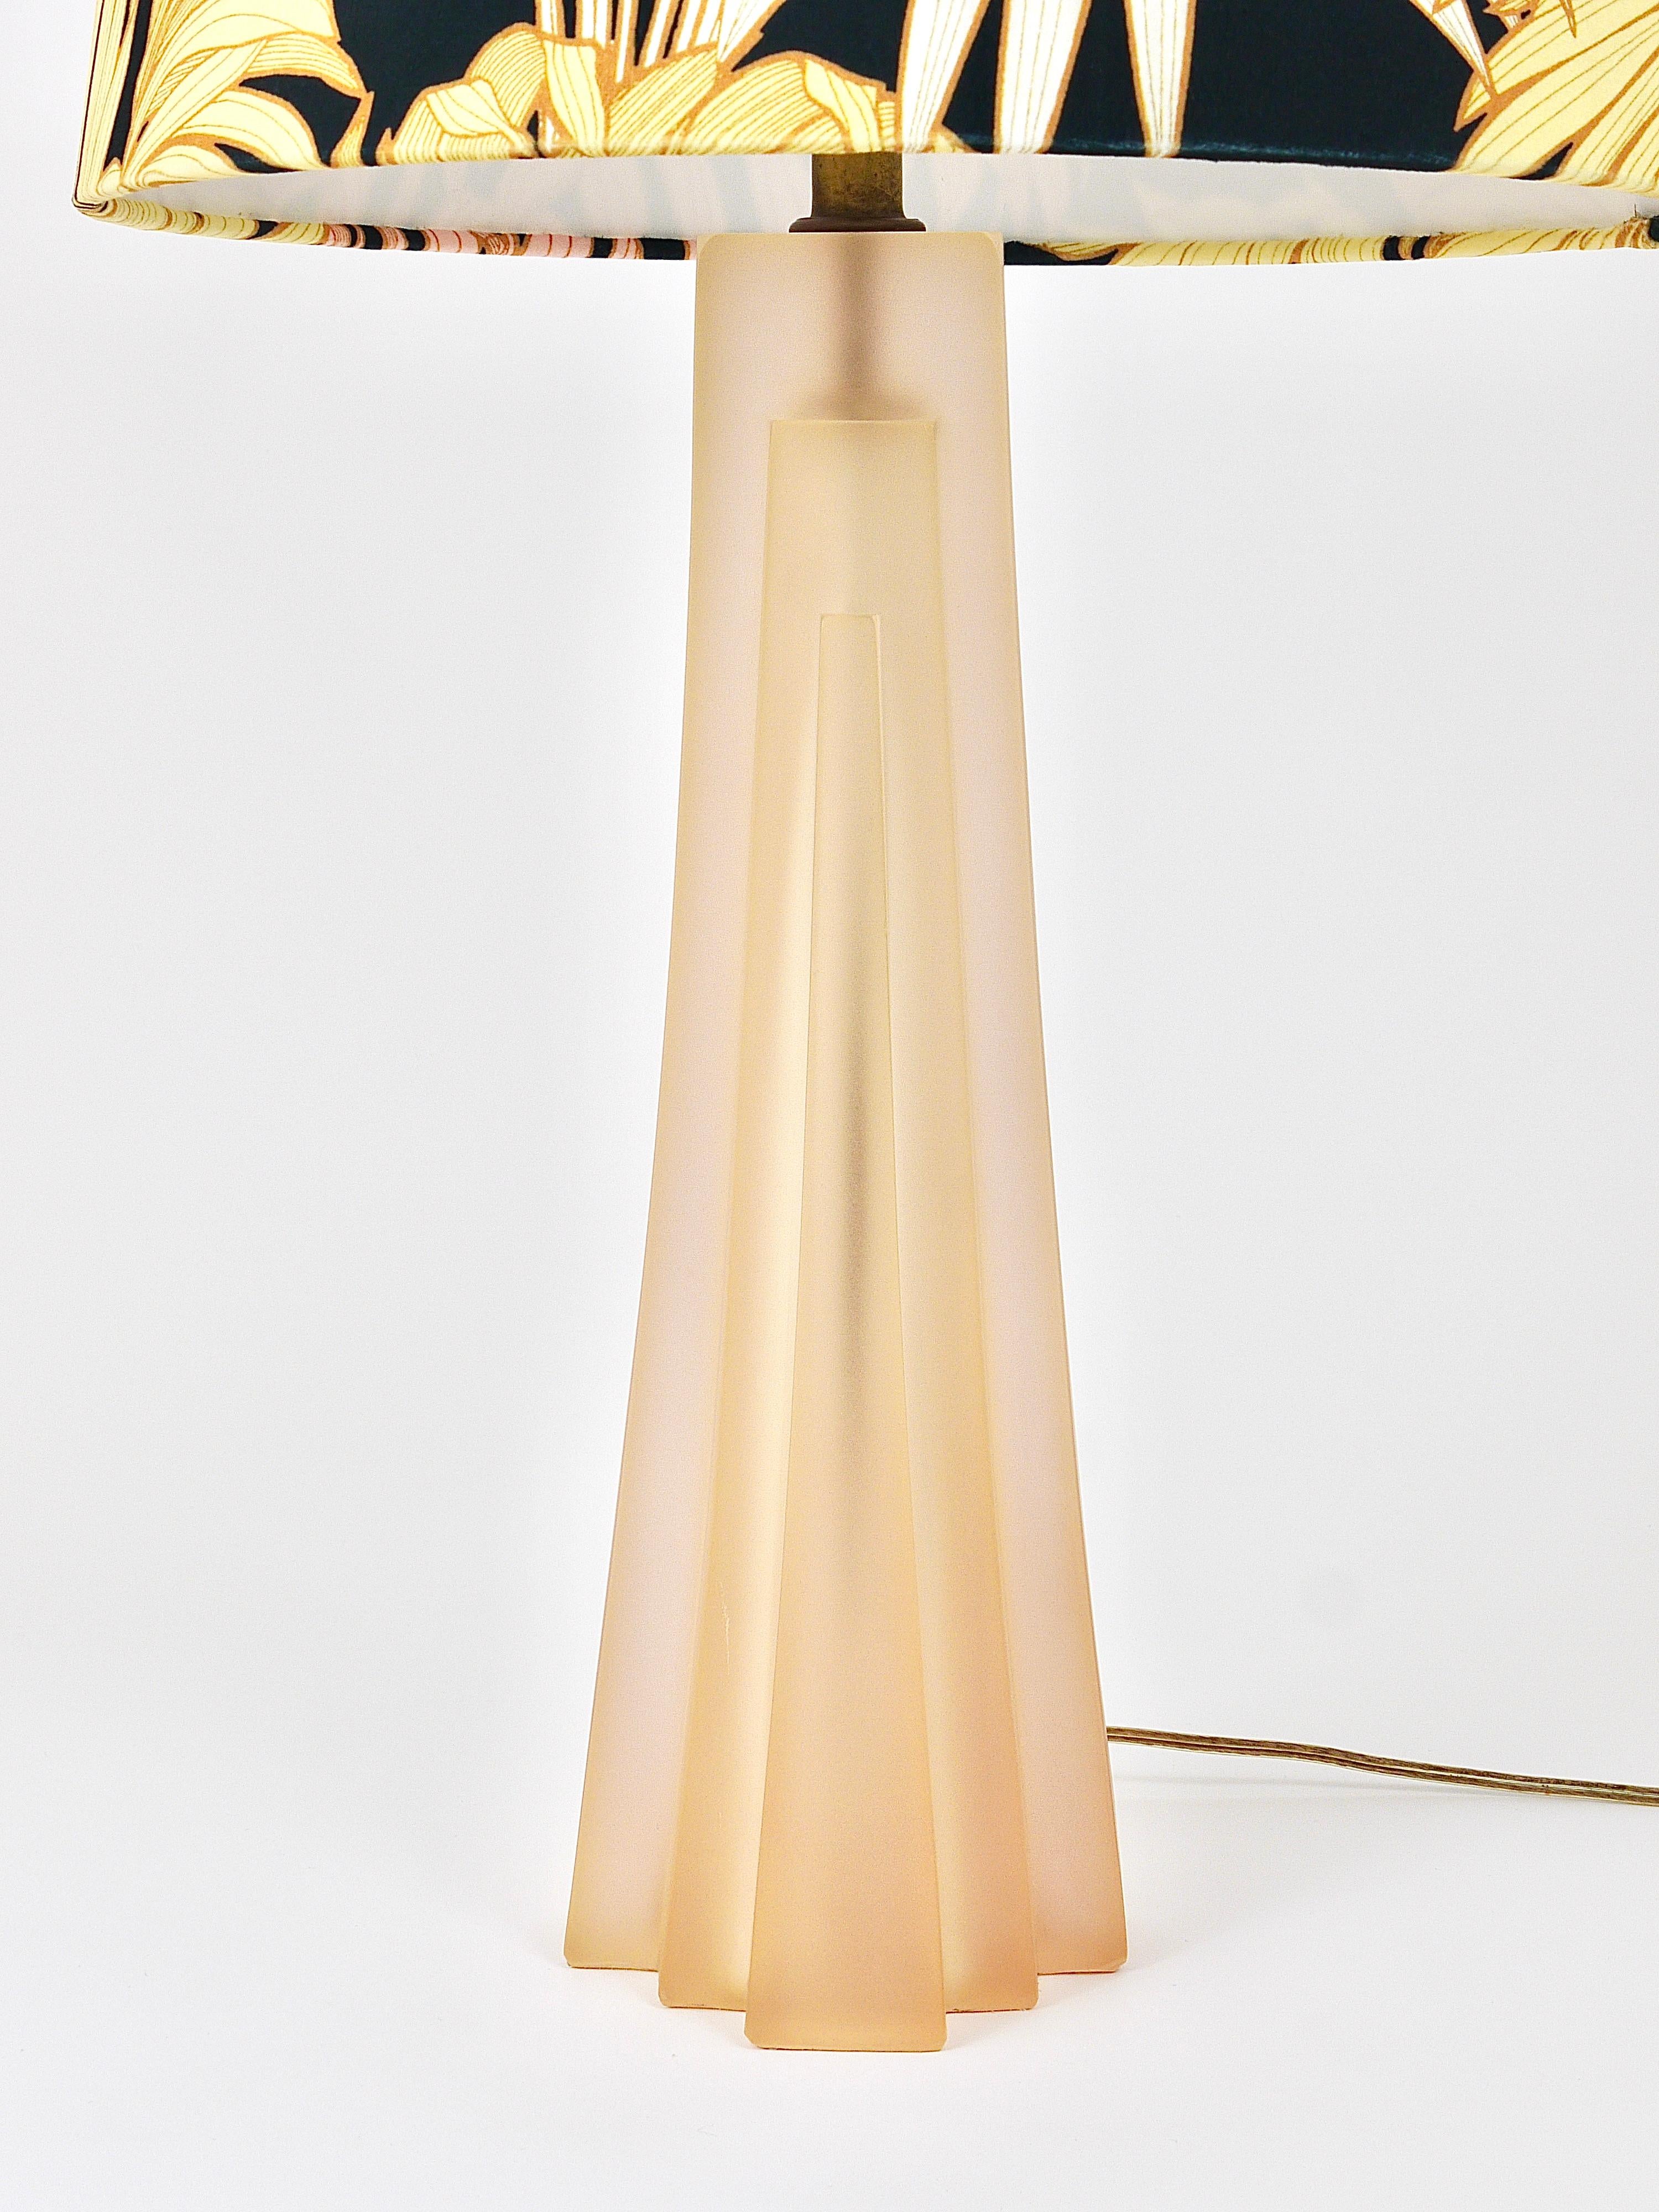 Paolo Gucci Art Deco Skyscraper Table Lamp, Lucite, Brass, Velvet, Italy, 1980s For Sale 6